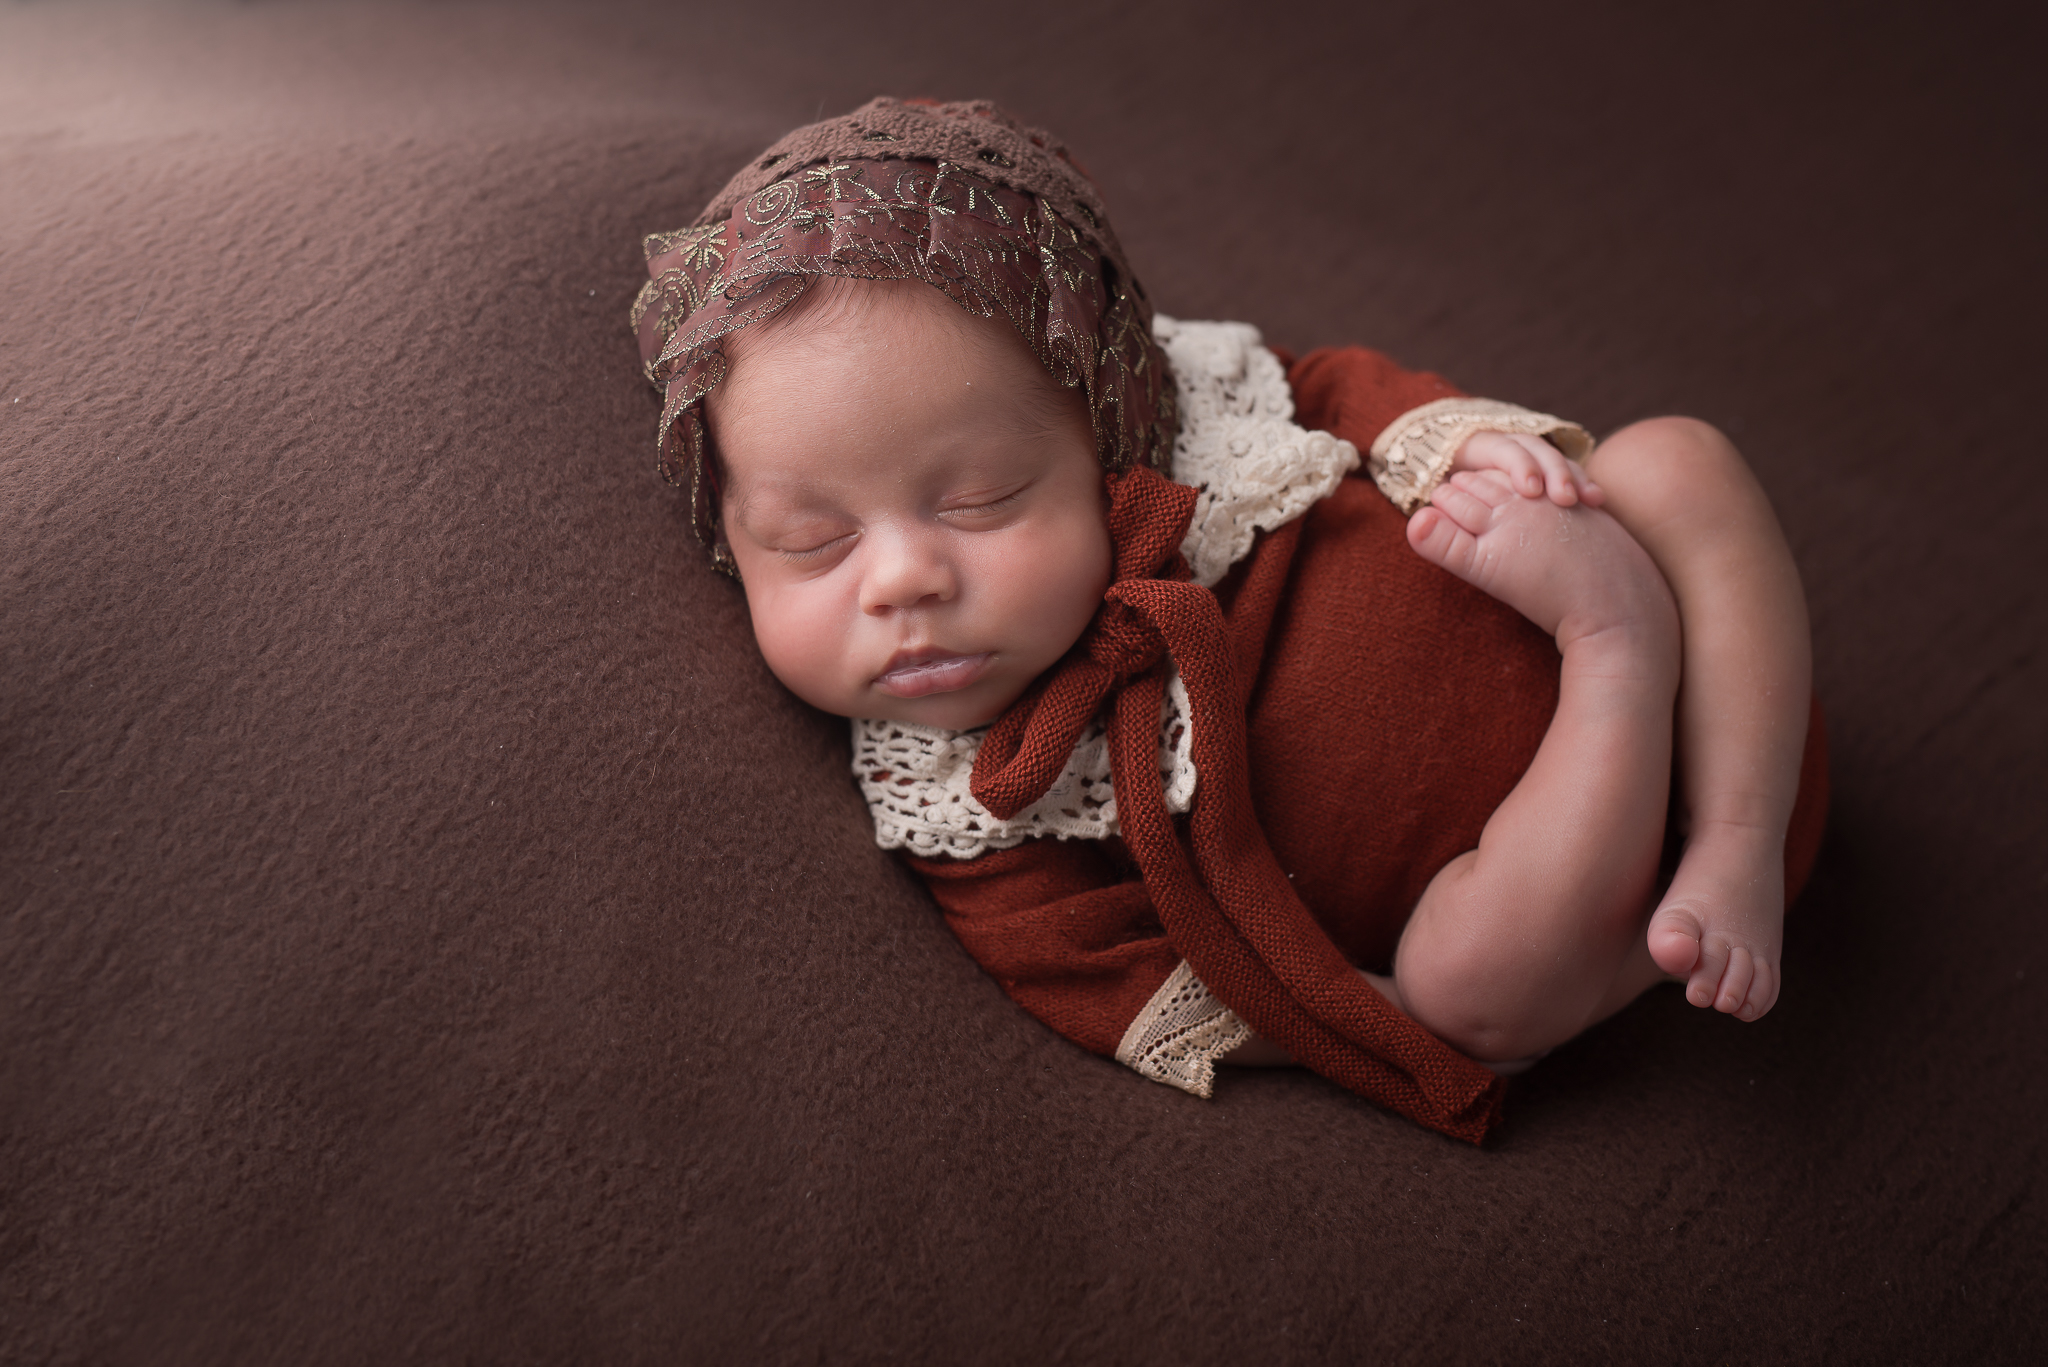 Newborn192NaomiLuciennePhotography052018-Edit.jpg